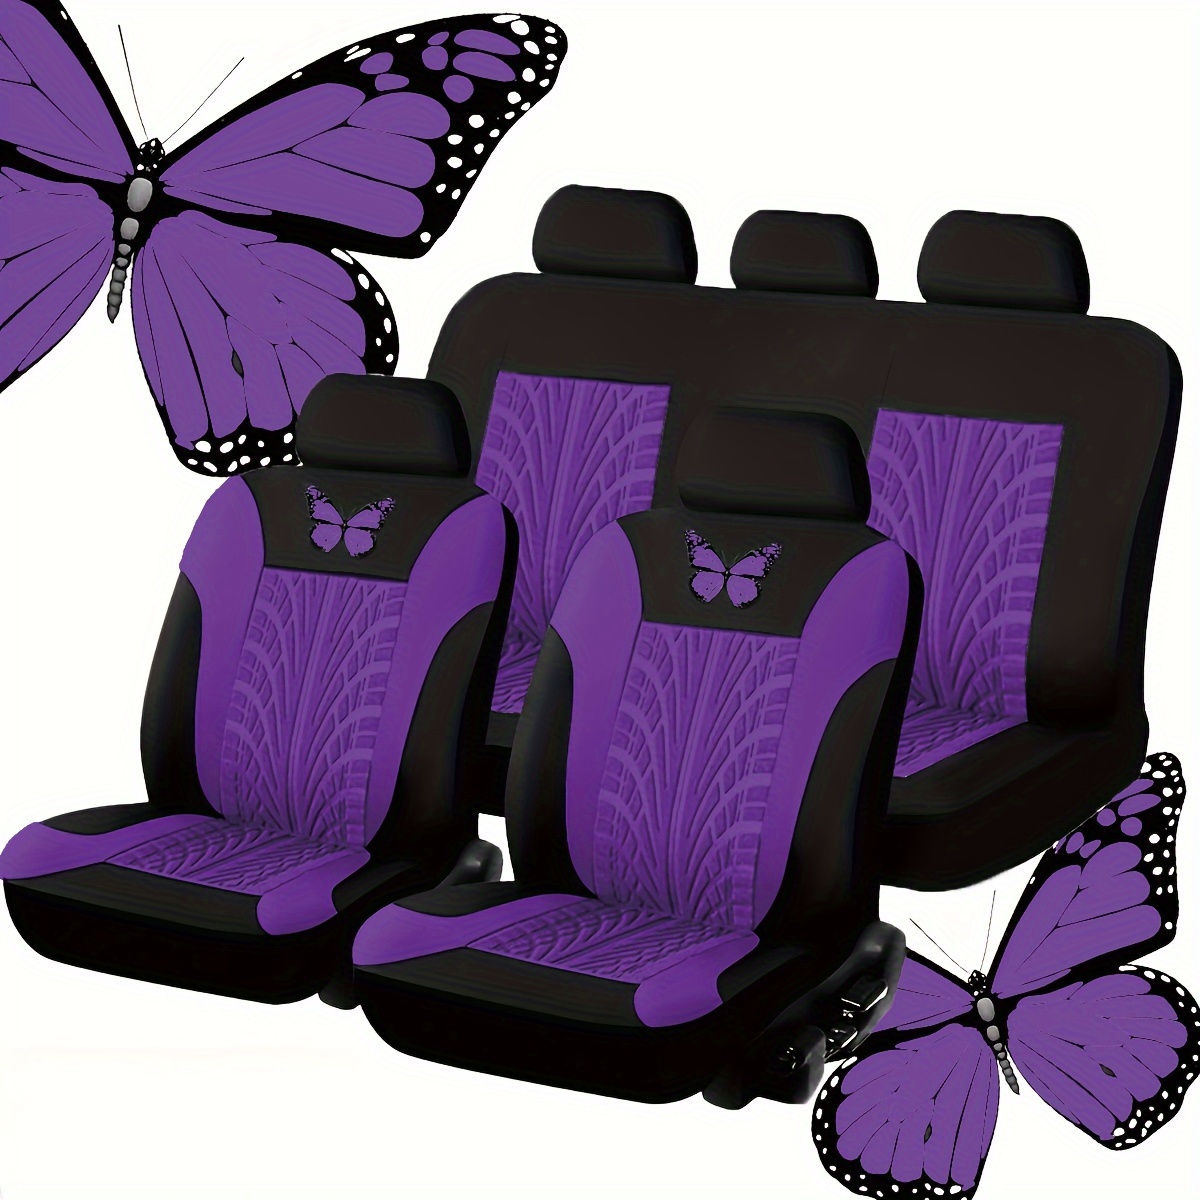 

Car Universal Seat Cover Butterfly Press 5 Seats Full Car 9pcs Set